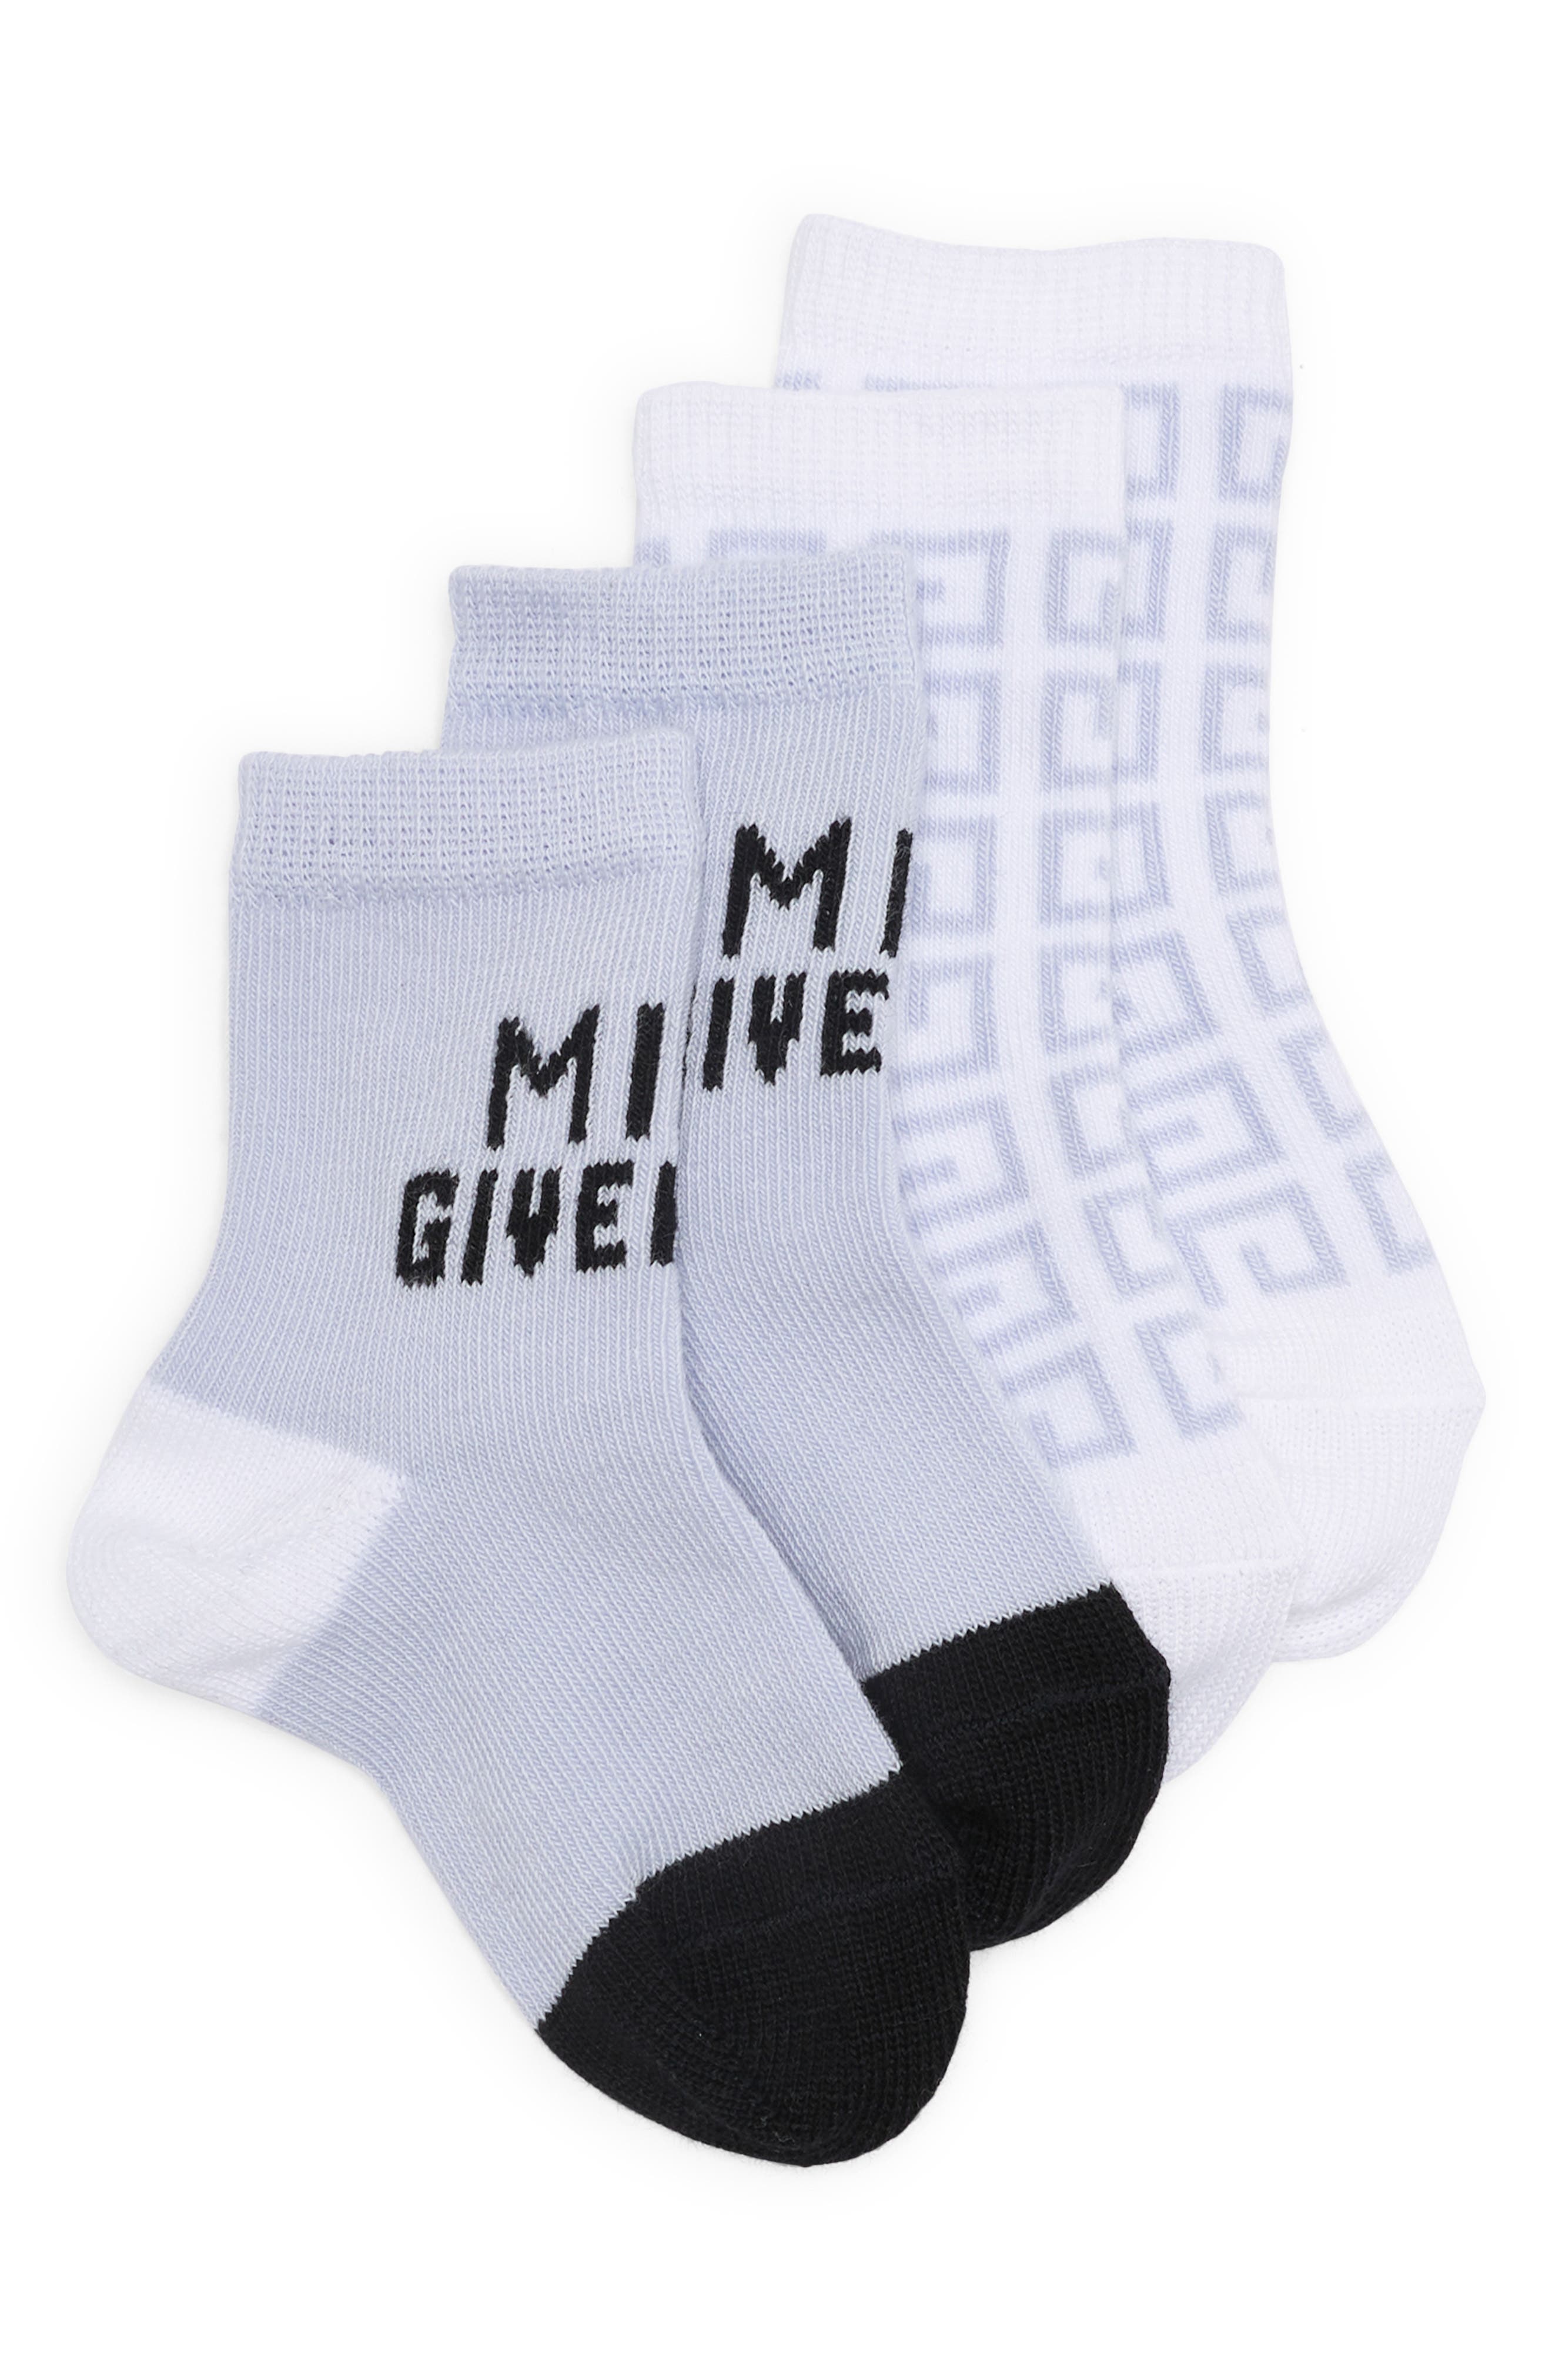 NWT Gymboree Girls Cotton Blend Socks 2-Pack Two-Pack 2pk NEW 2-pk Set NEW 